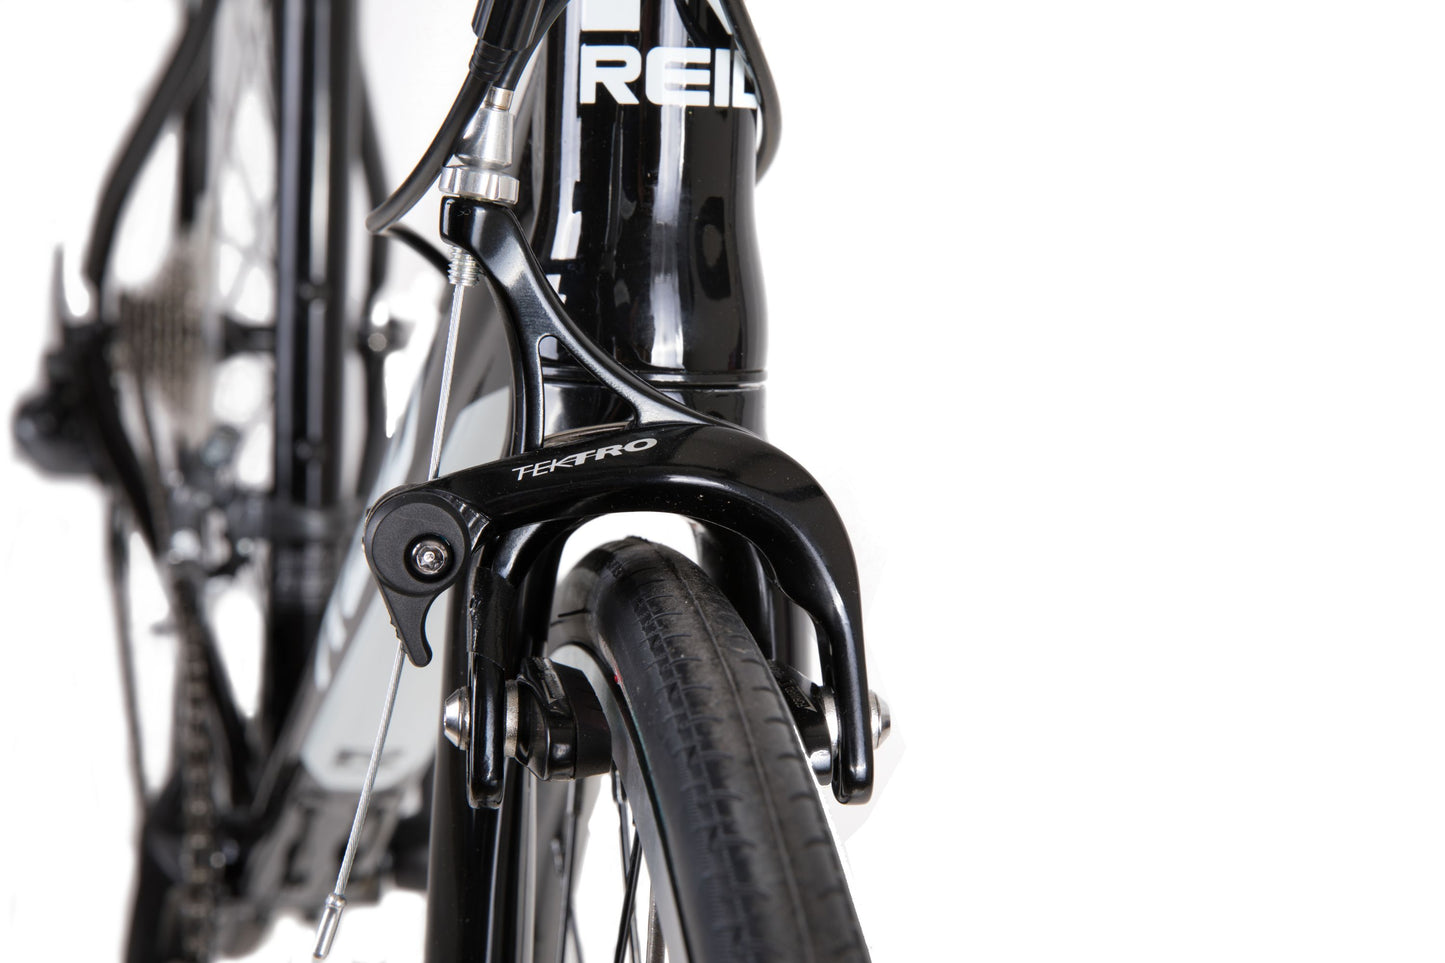 Osprey Road Bike in black showing Tekro dual pivot caliper brakes from Reid Cycles Australia 